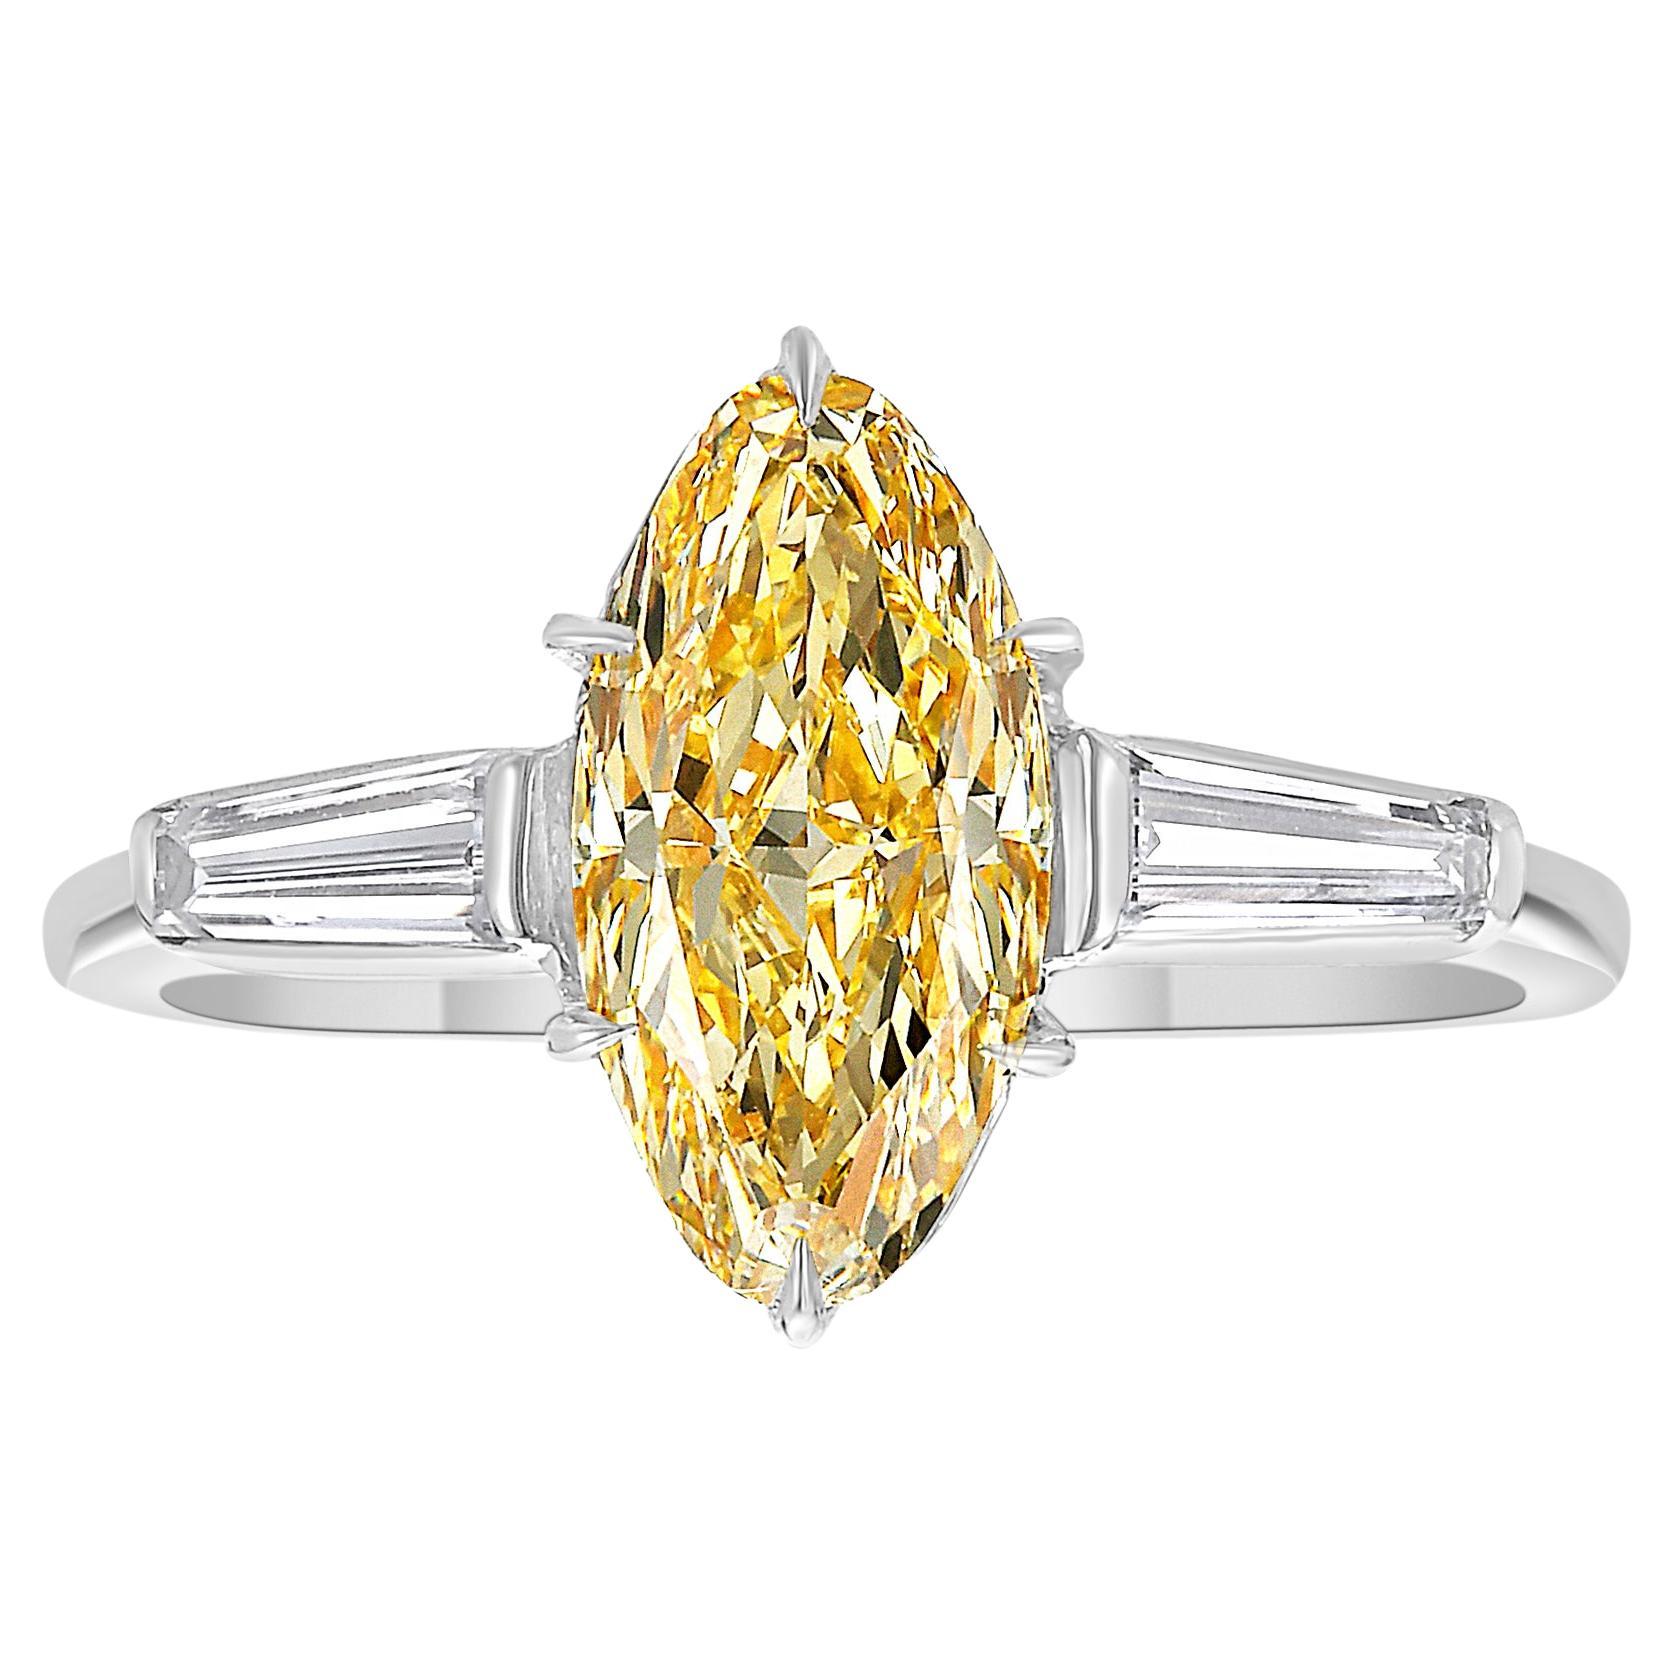 1.40ct GIA Fancy Intense Orangy Yellow Marquise Cut Diamond Ring